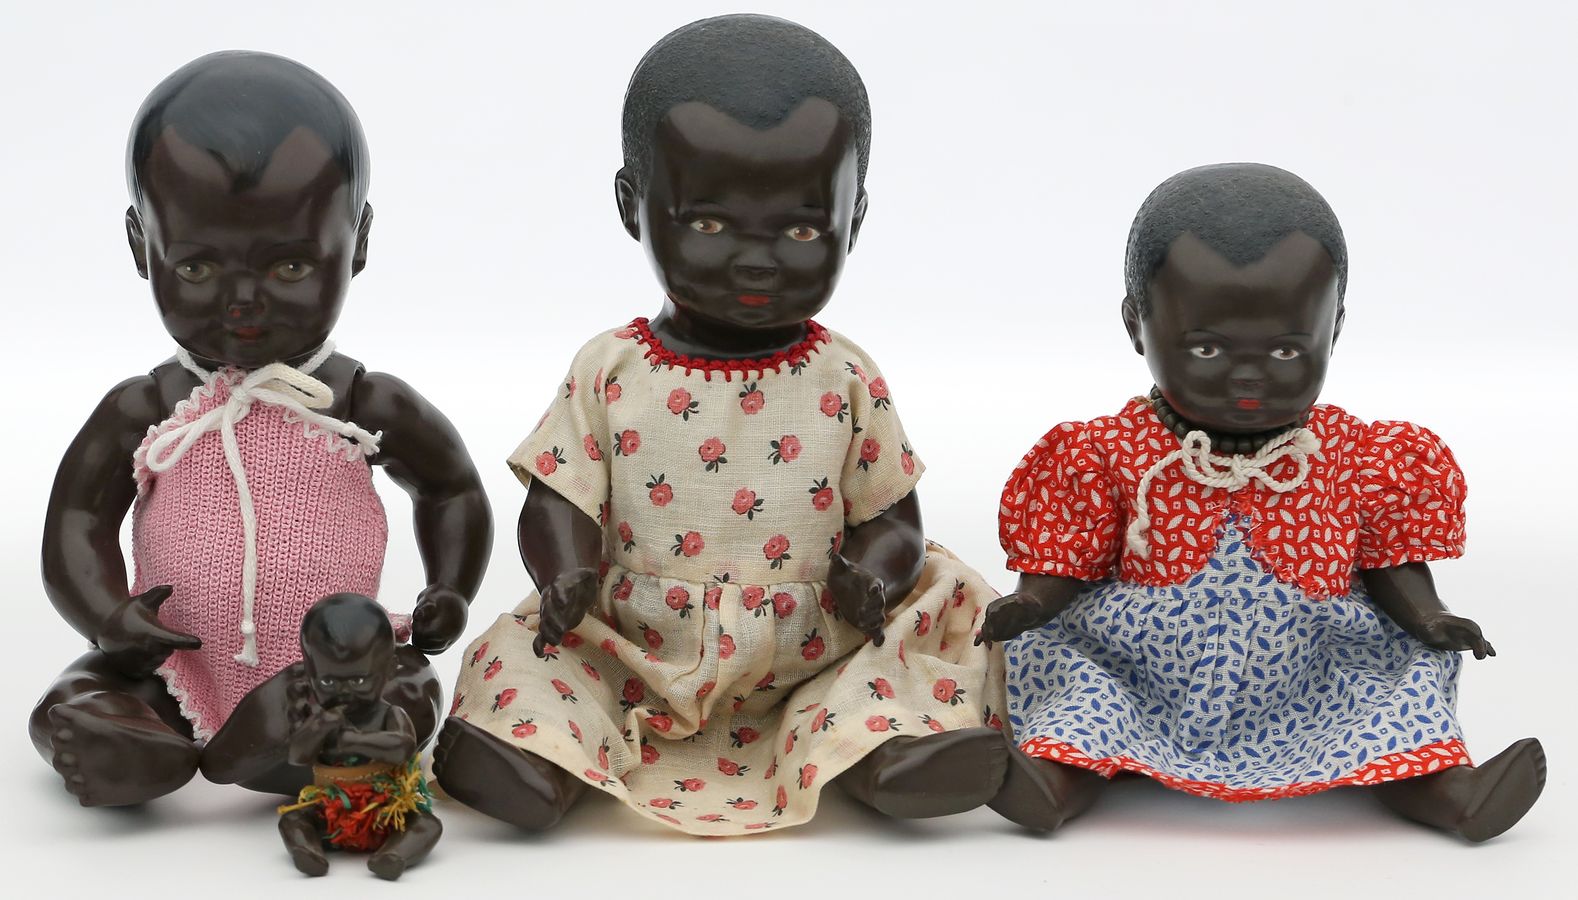 4 Babypuppen mit dunkler Hautfarbe.